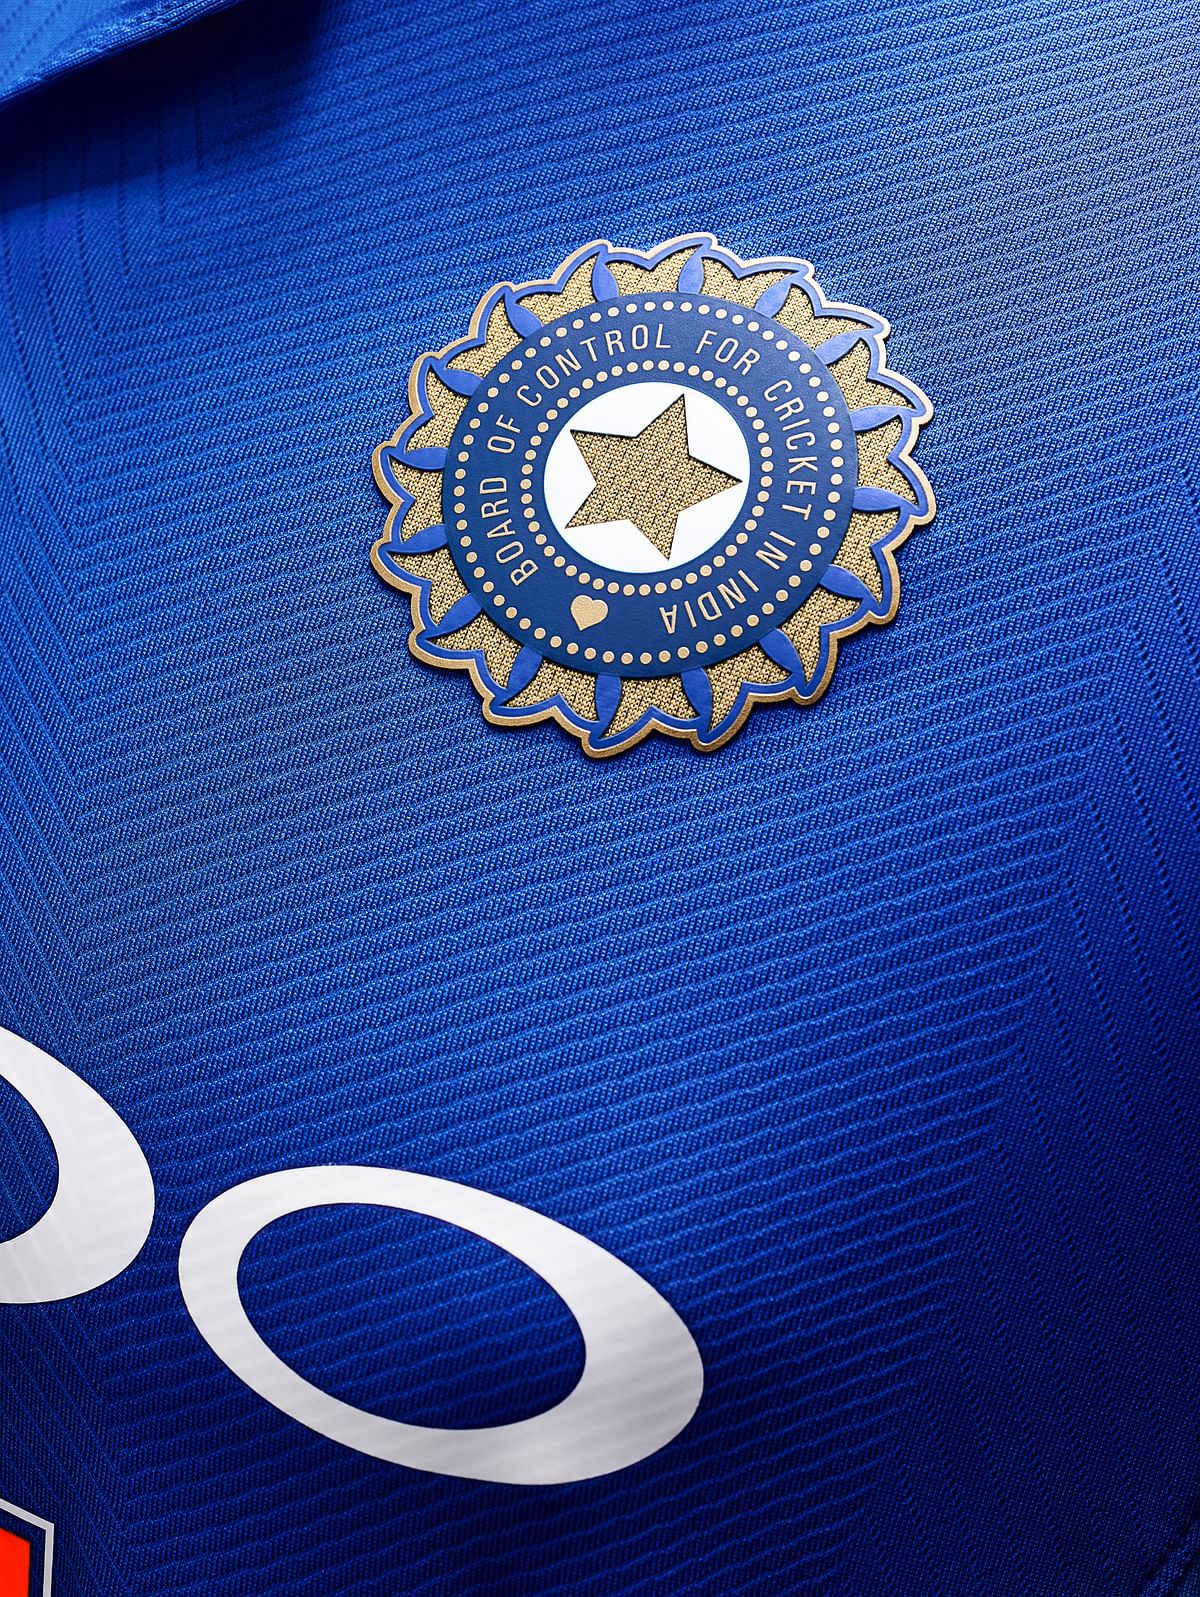 Indian Cricket Team Logo Wallpaper Free Indian Cricket Team Logo Background